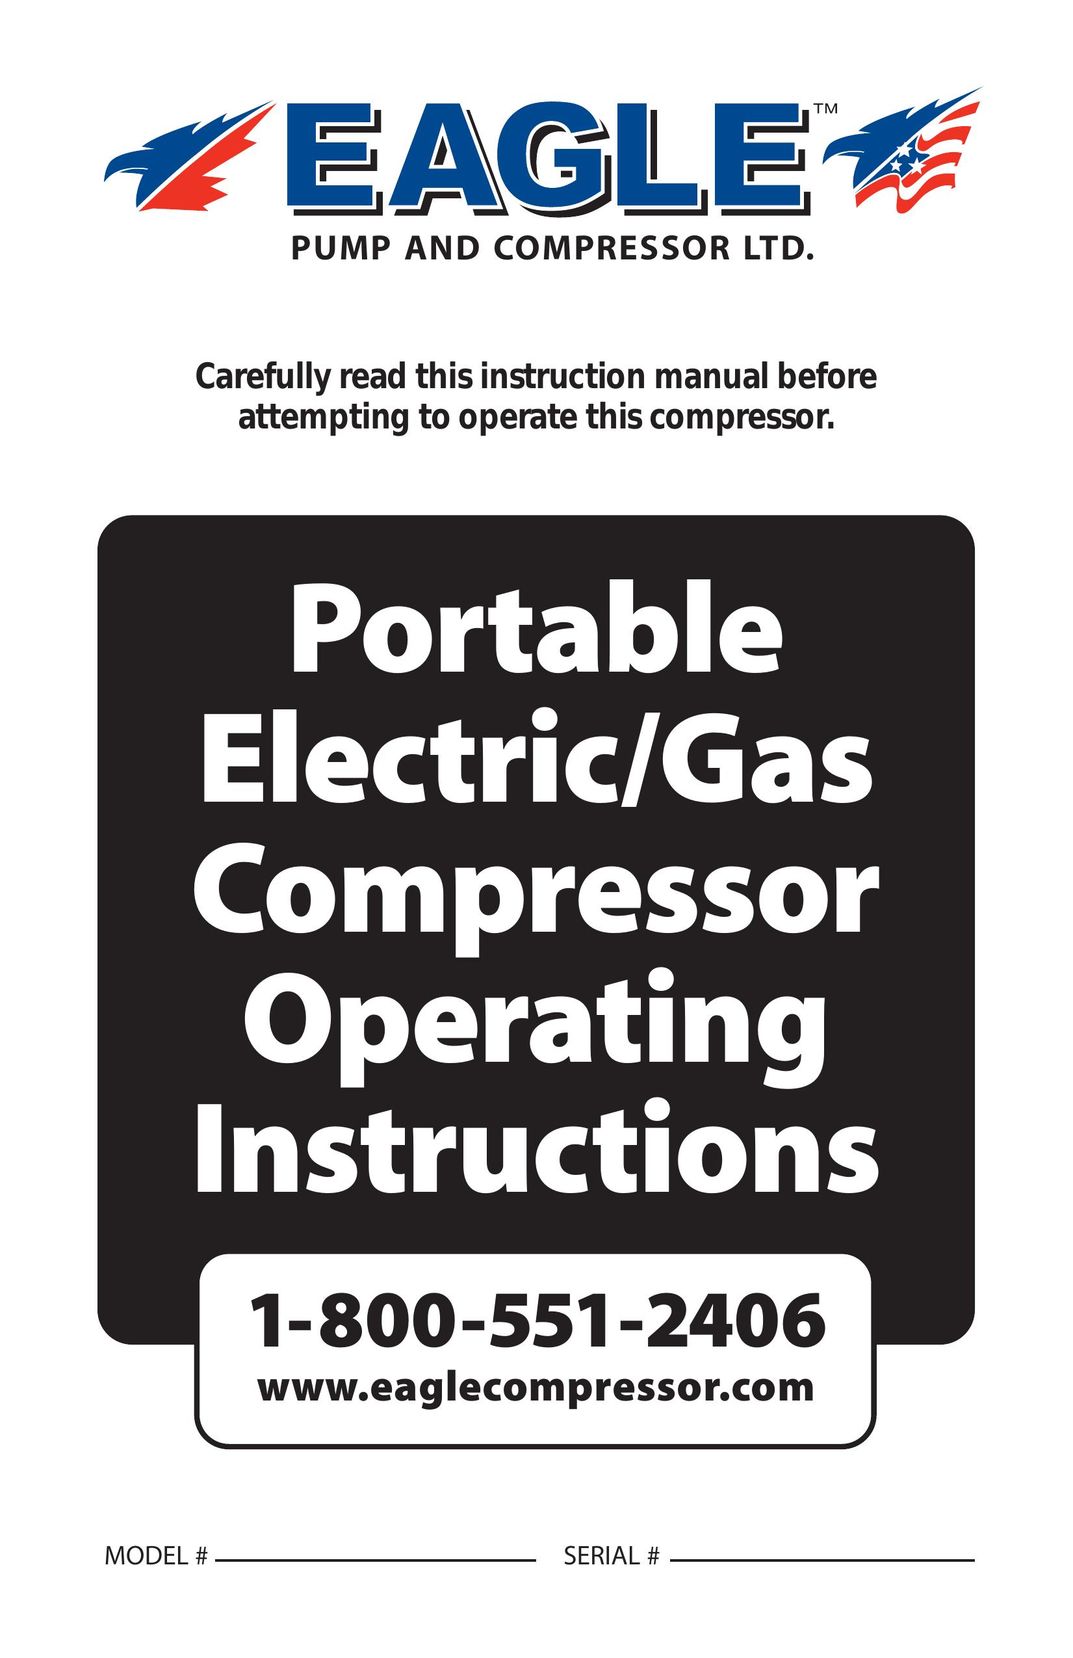 Eagle Home Products Portable Electric/Gas Compressor Air Compressor User Manual